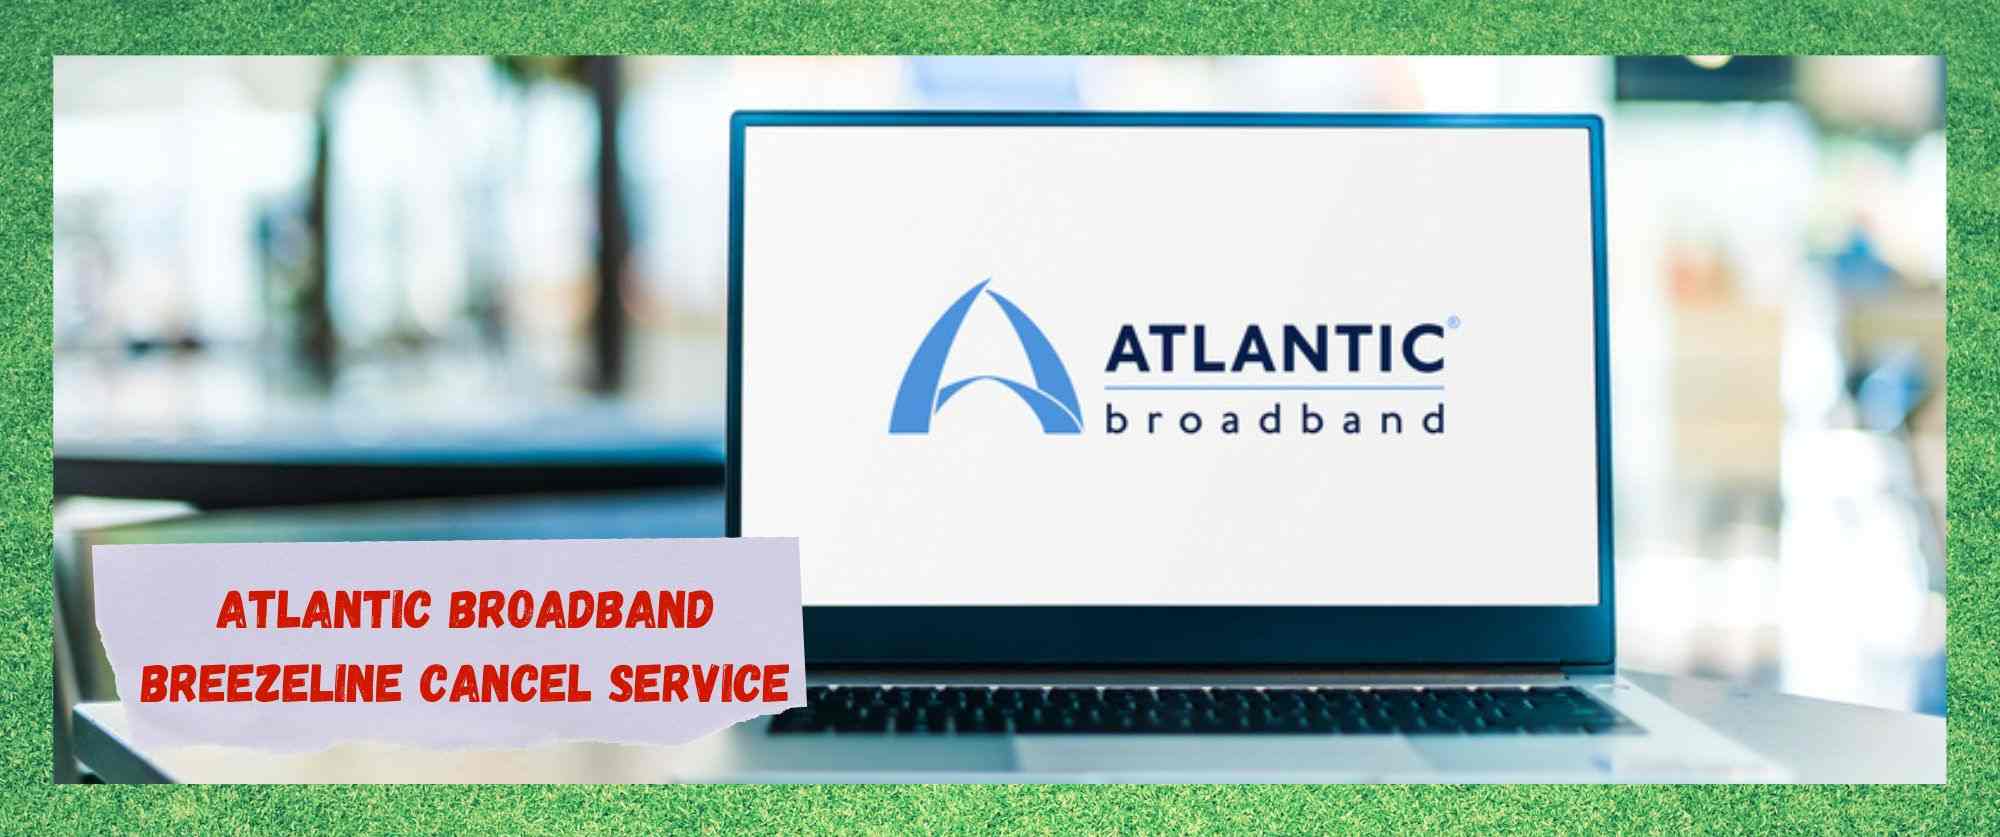 atlantic broadband breezeline cancel service